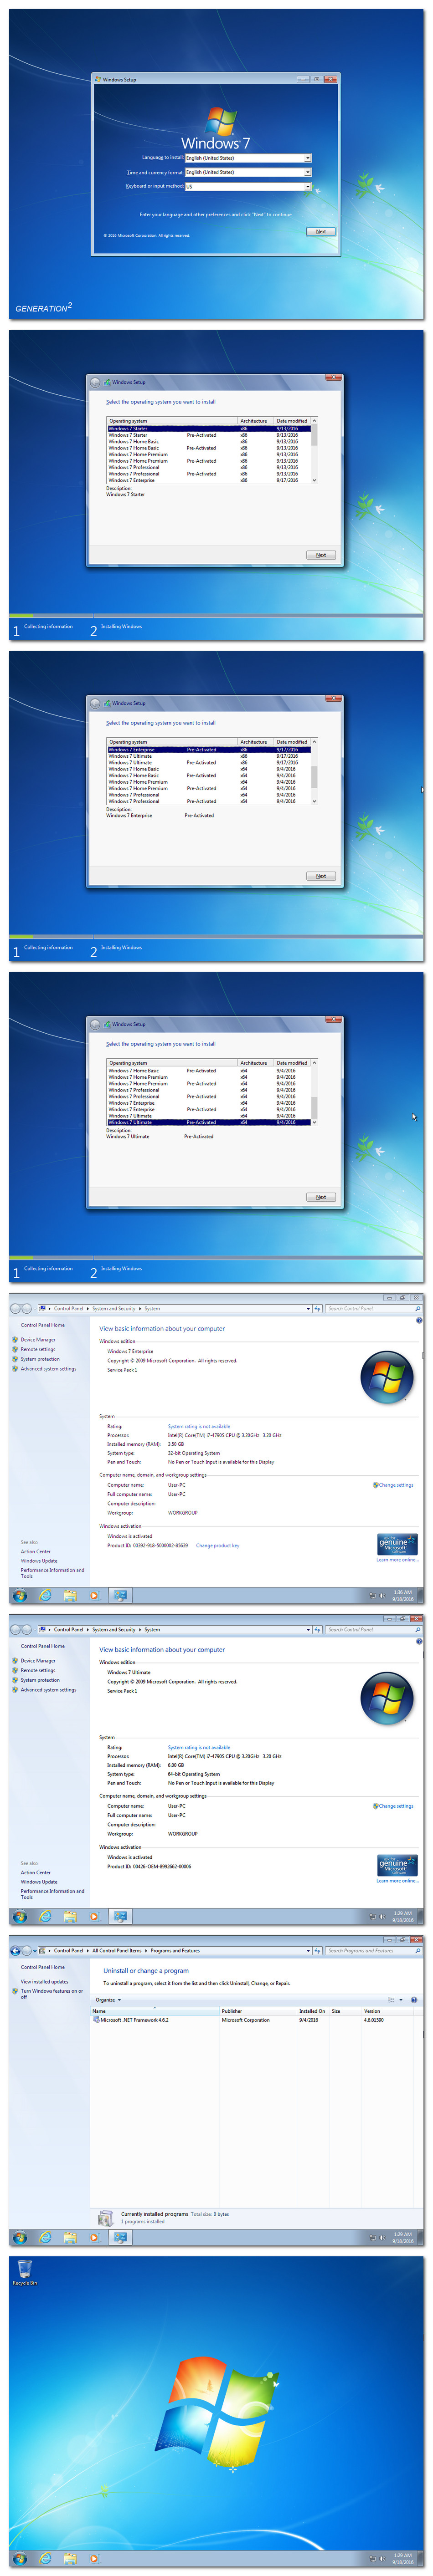 Download ms dart 8 iso wim x64 free windows 7